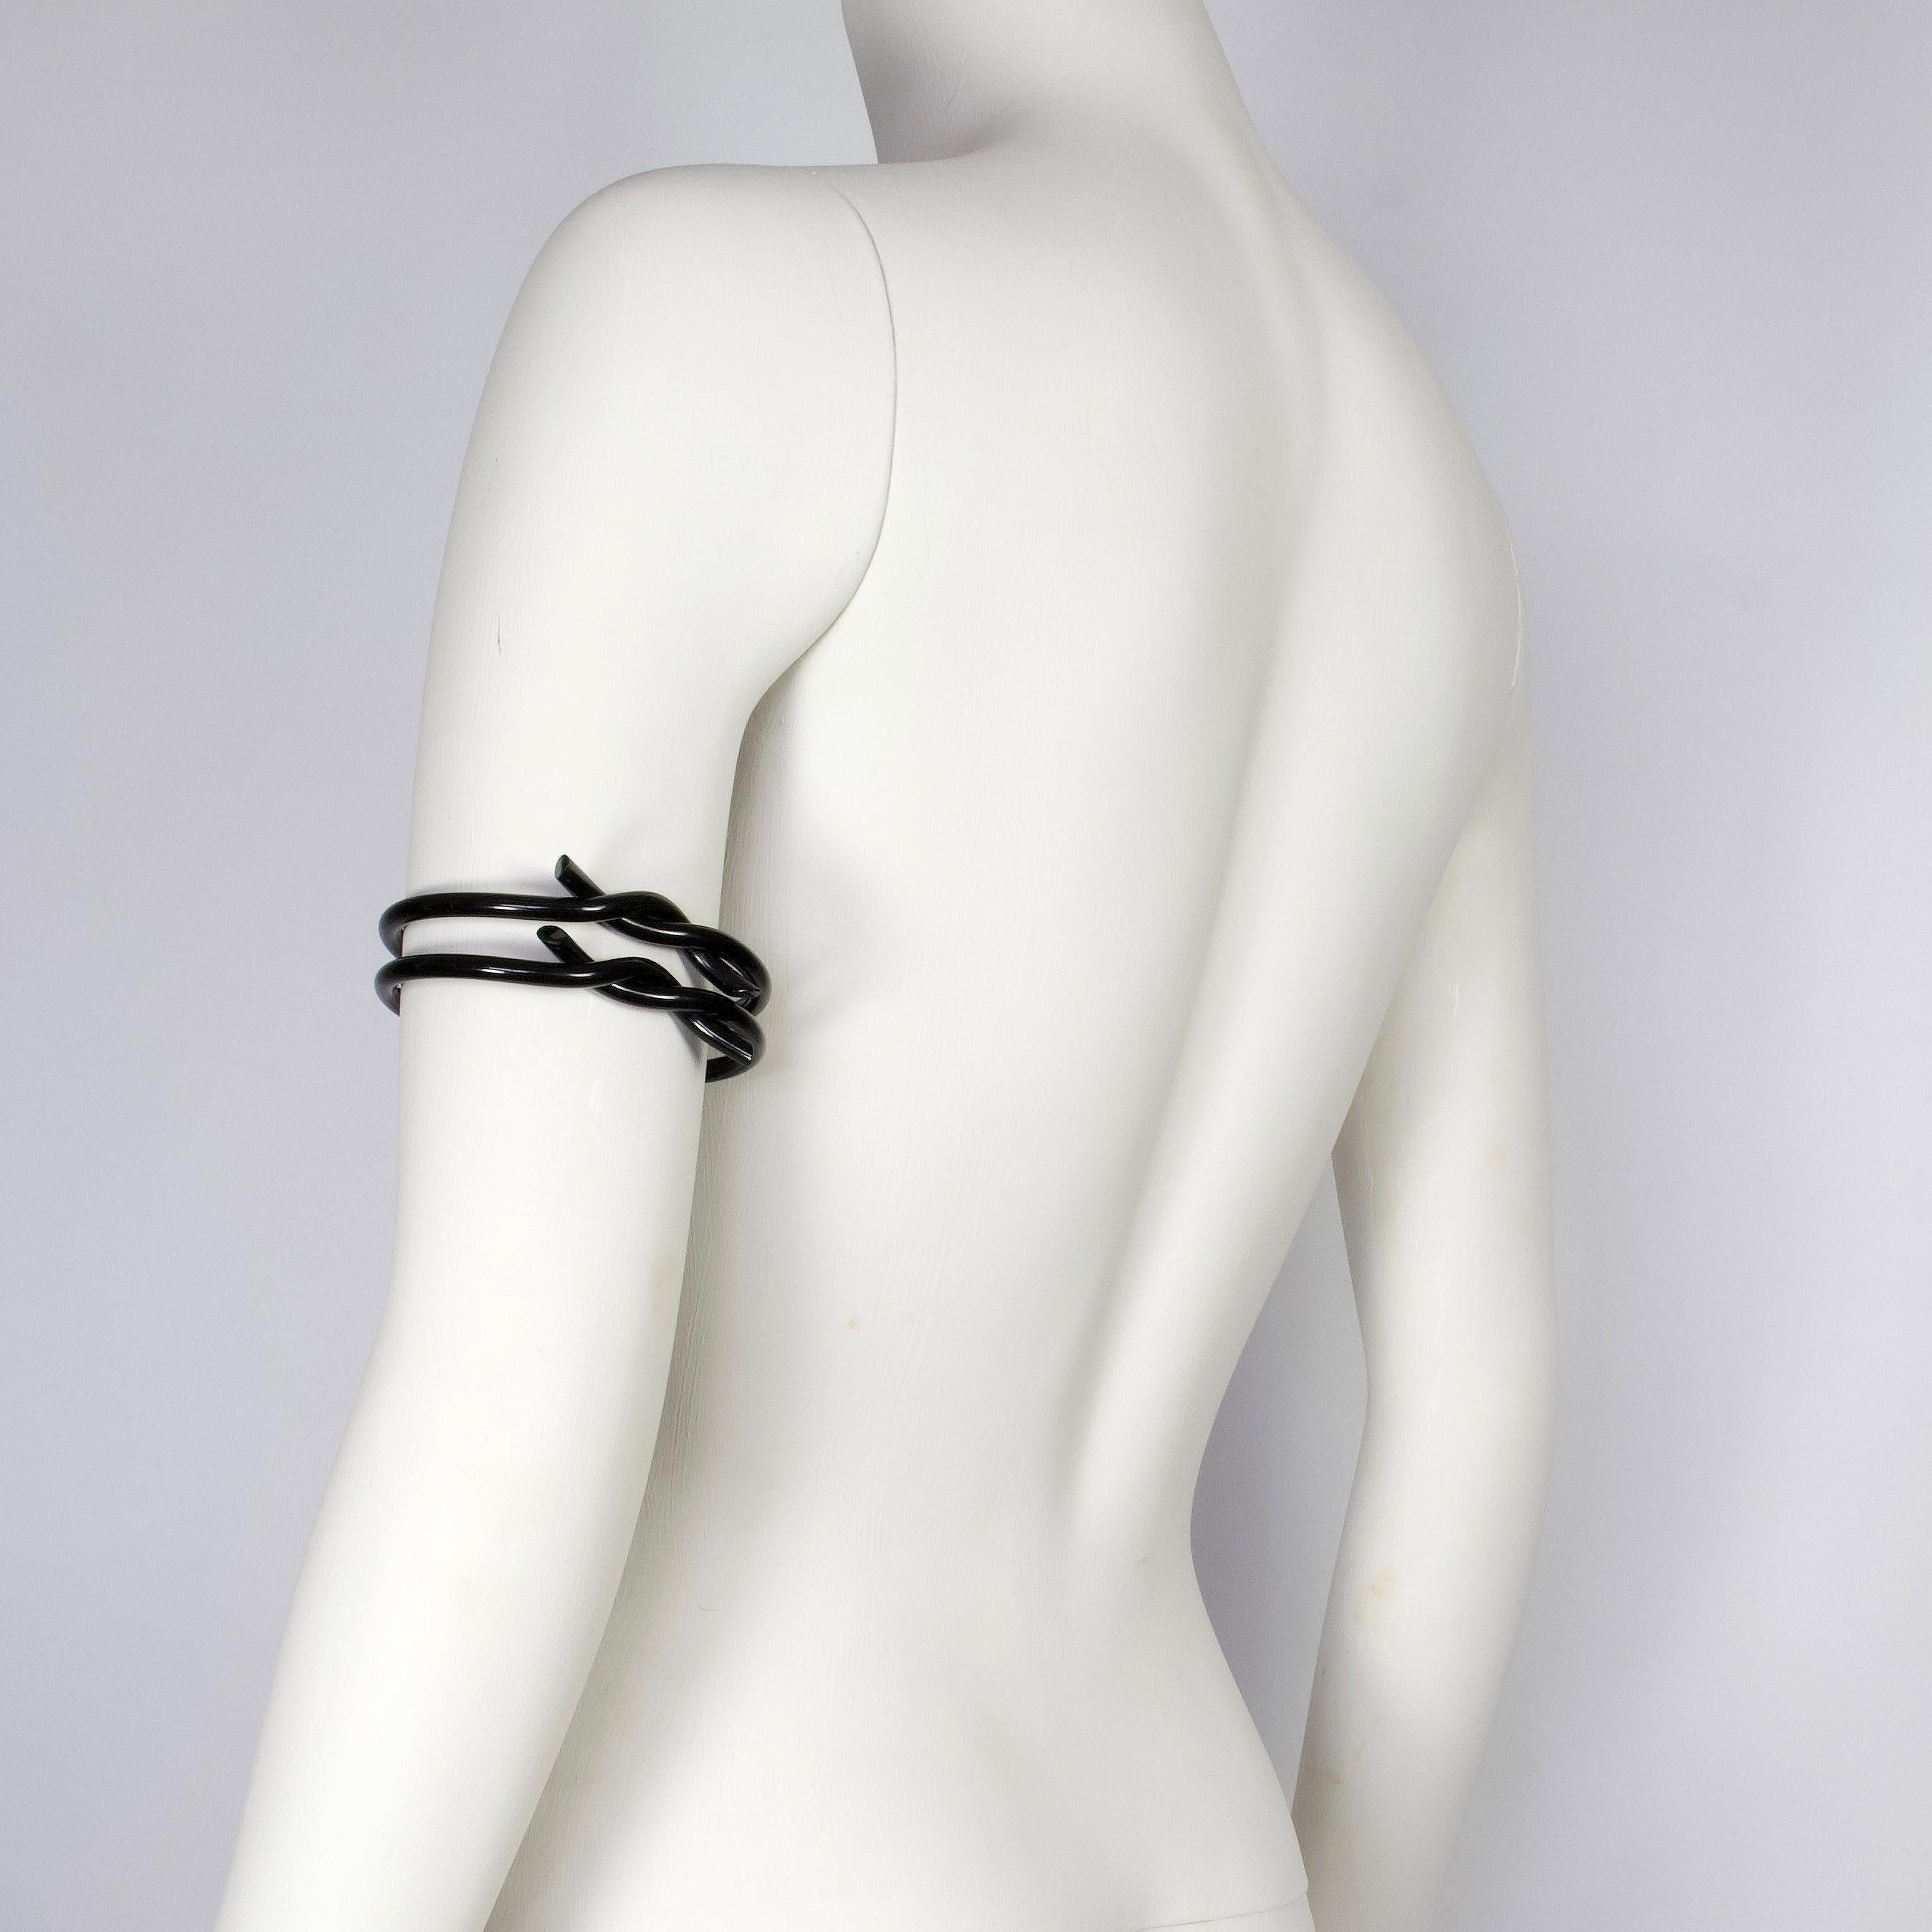 Product Details: 980s Vintage Bracelets x 2 - Barbed Wire Detailing - Black Plastic - RARE 
Materials: Black Plastic
Size: Freesize
Bracelet Inner Circumference: 24 cm
Bracelet Depth: 0.7 cm
Condition: Good Condition / Minor Surface Scratches Due to